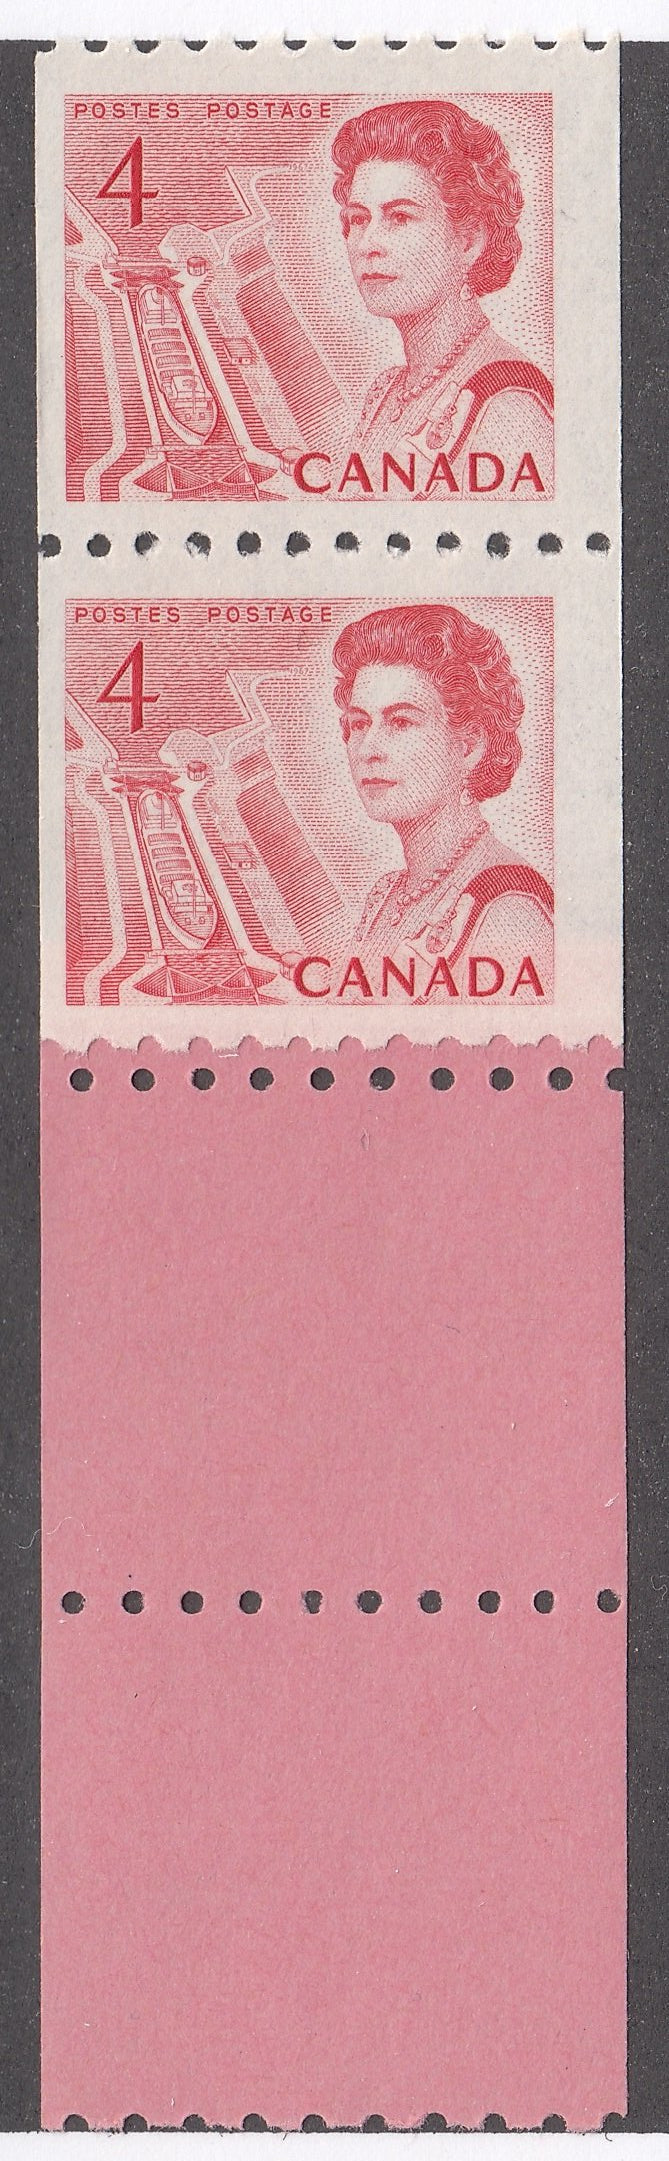 0467CA2103 - Canada #467 - Mint Coil Pair Starter